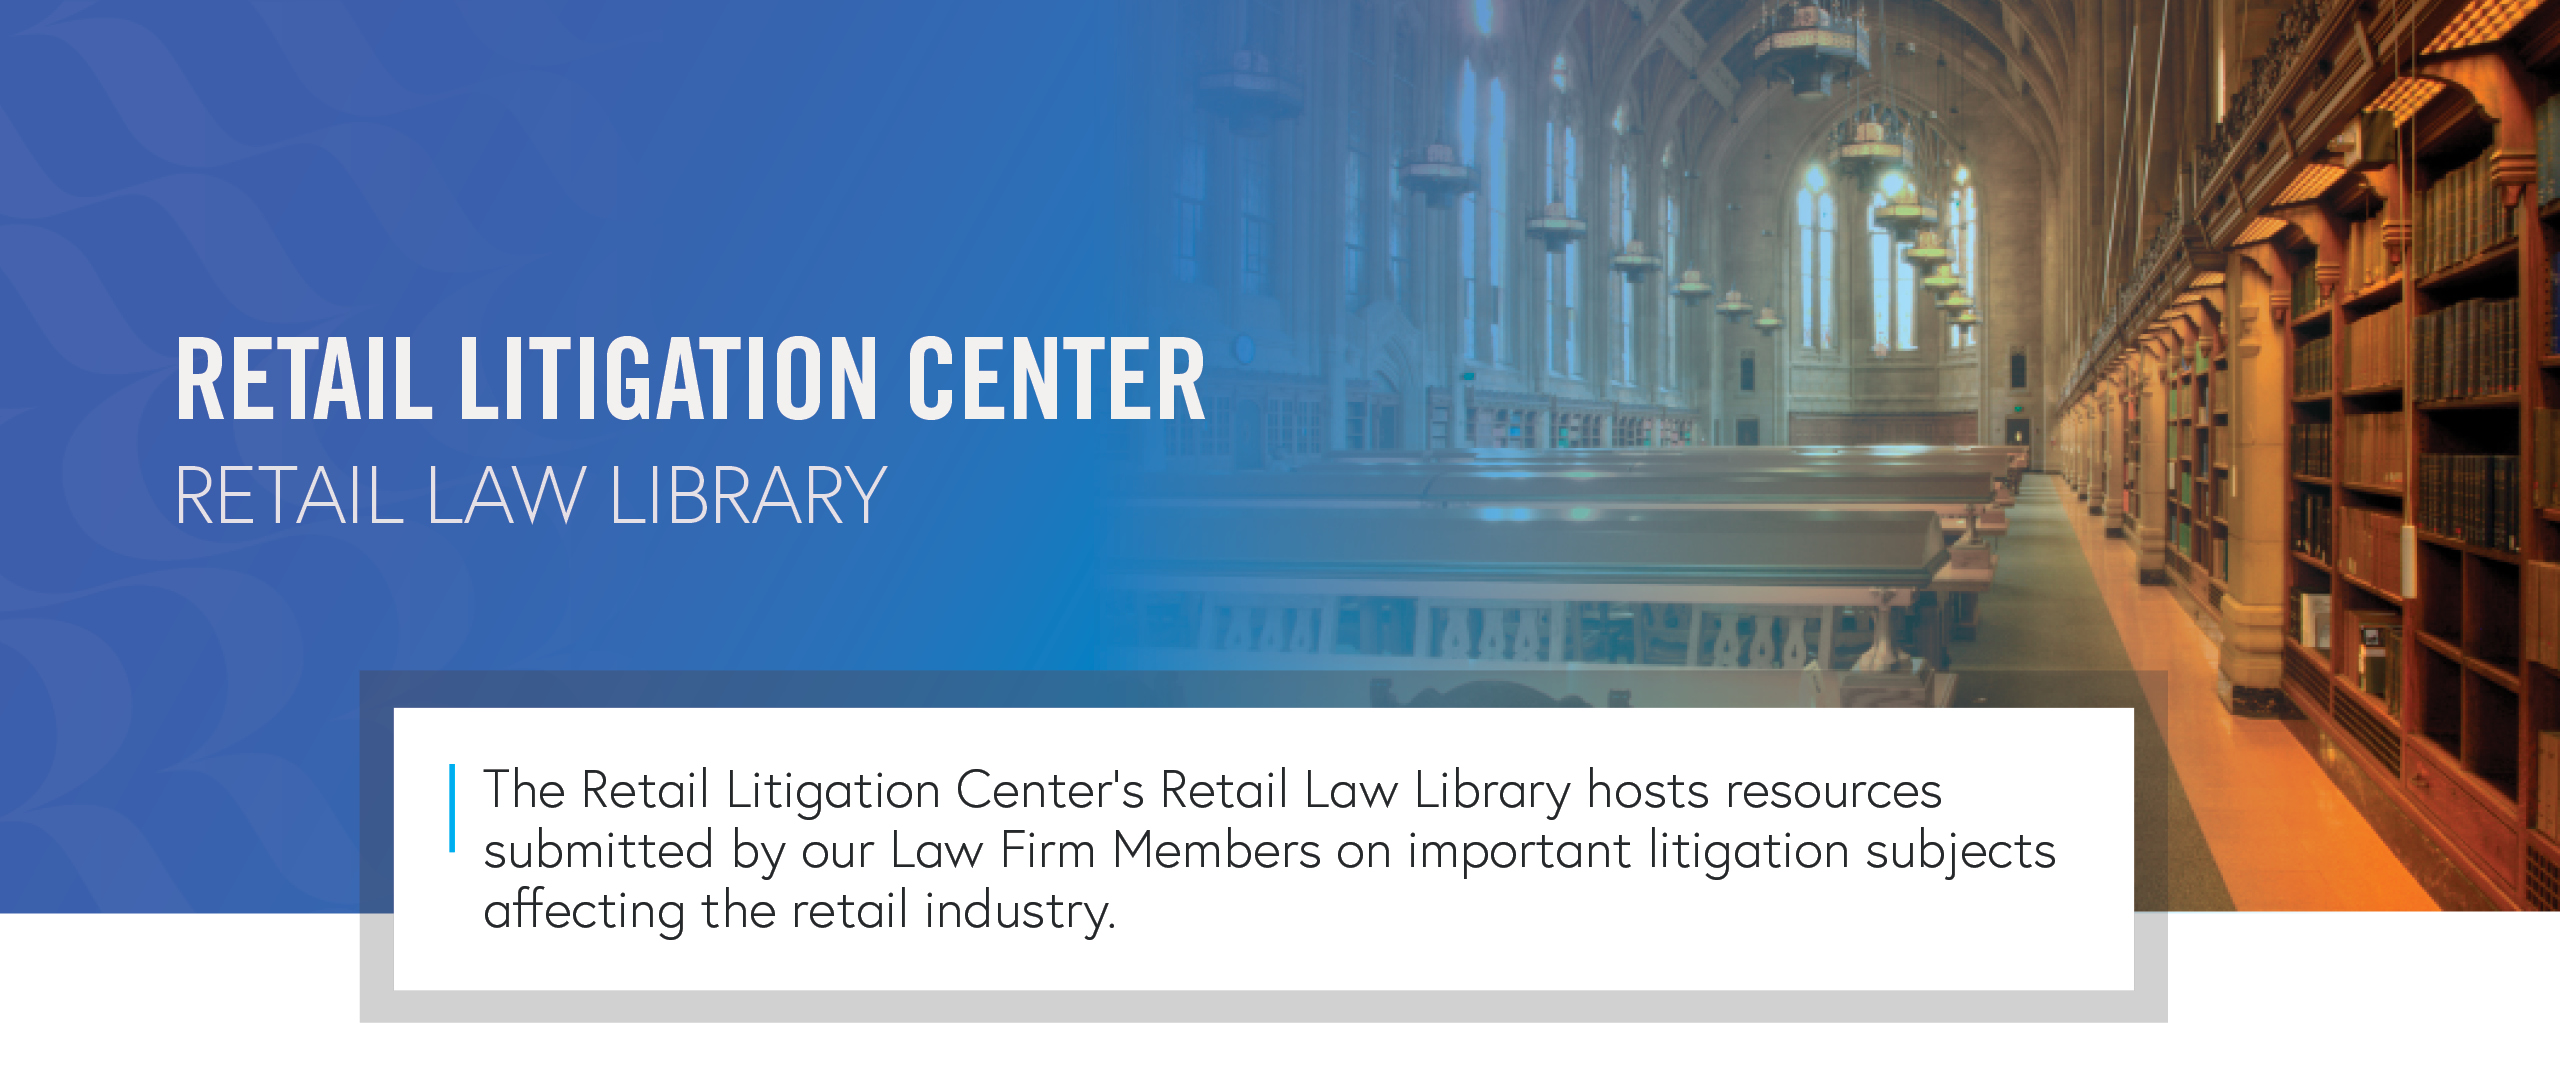 Retail Litigation Center Retail Law Library